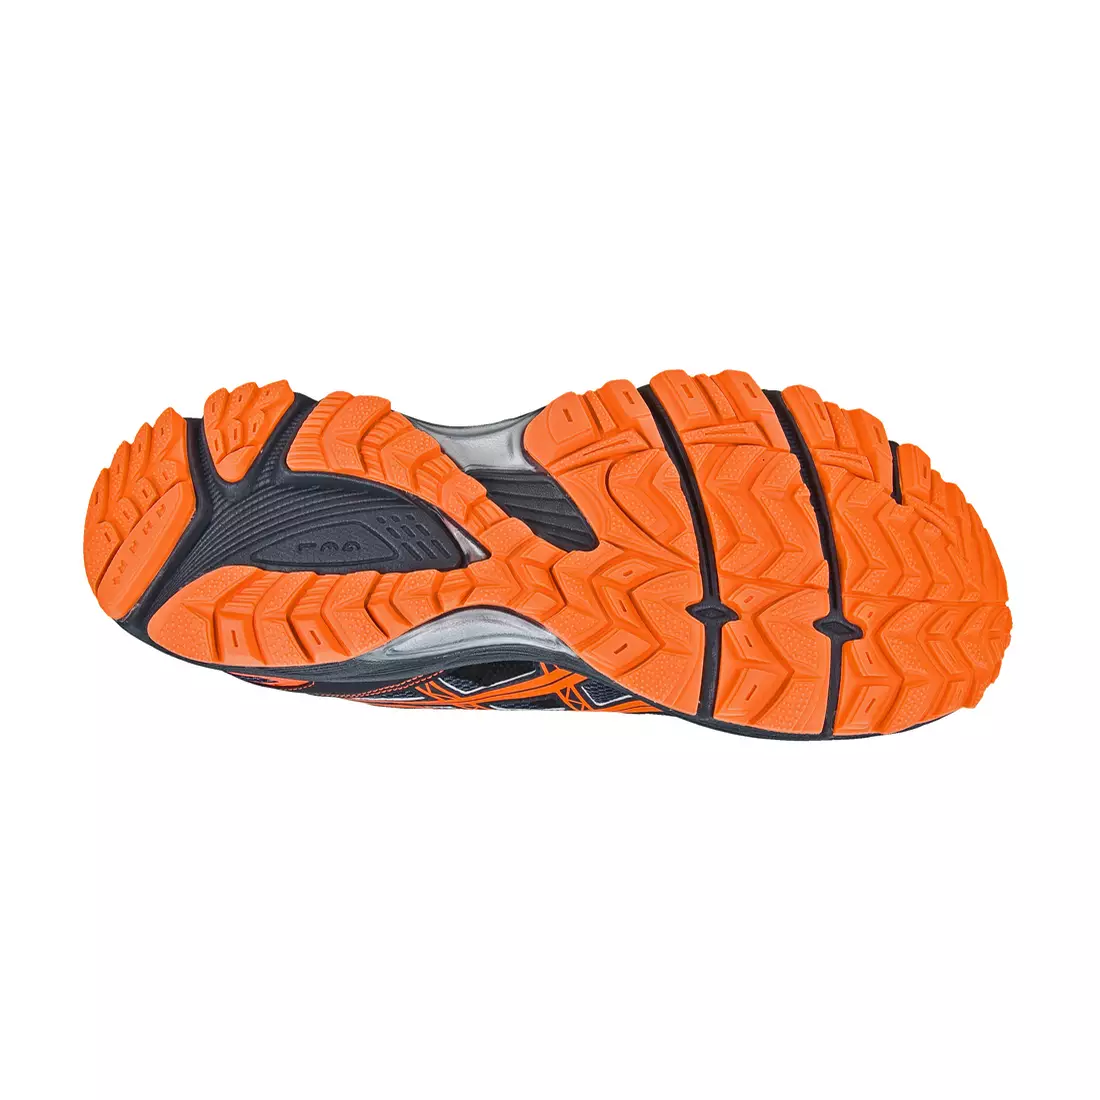 ASICS GEL ENDURO 9 - pantofi alergare 7932, culoare: Negru si portocaliu